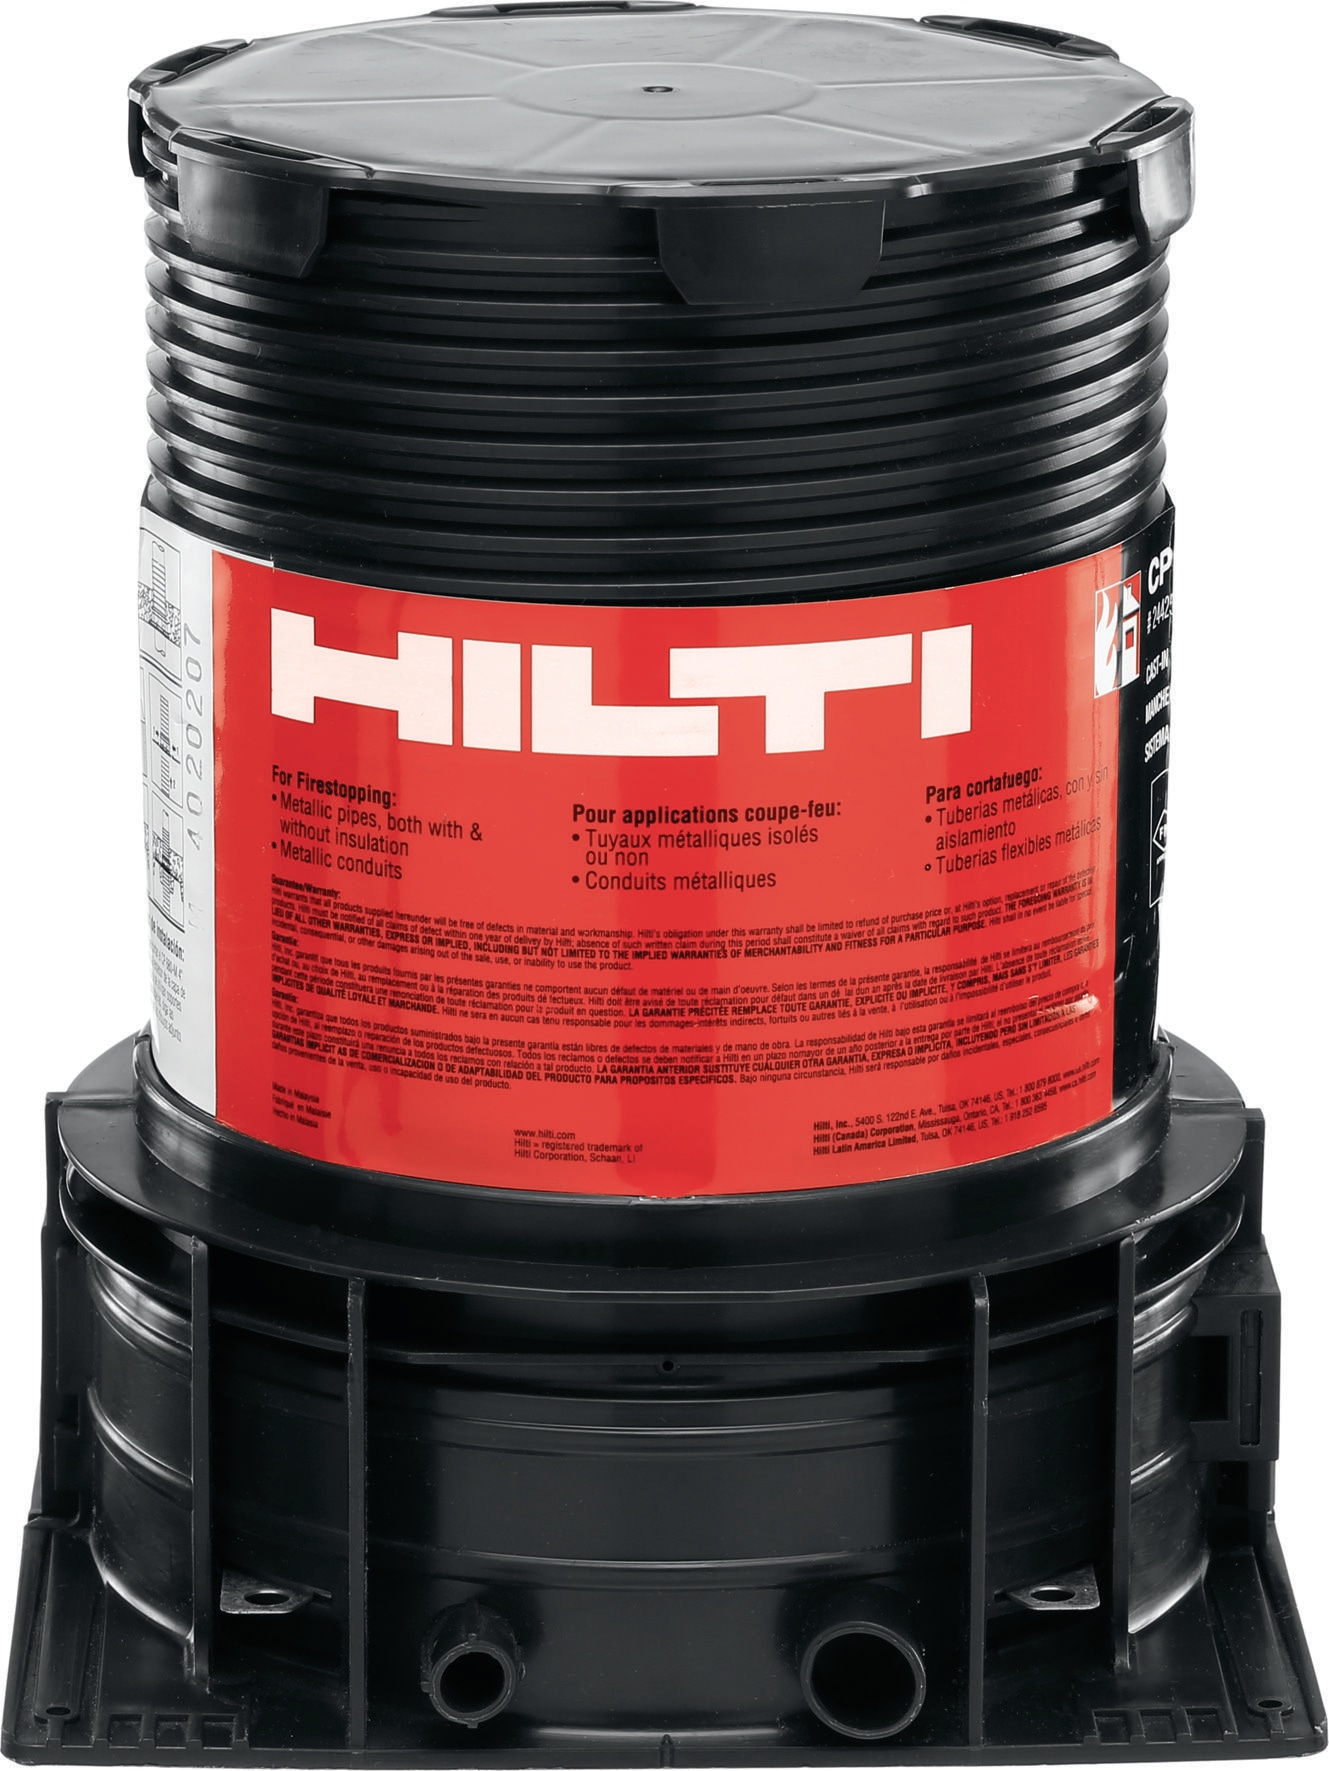 2213357 Red USA made Hilti HILTI CP 680-P 6" Cast-In Fire stop Device No 